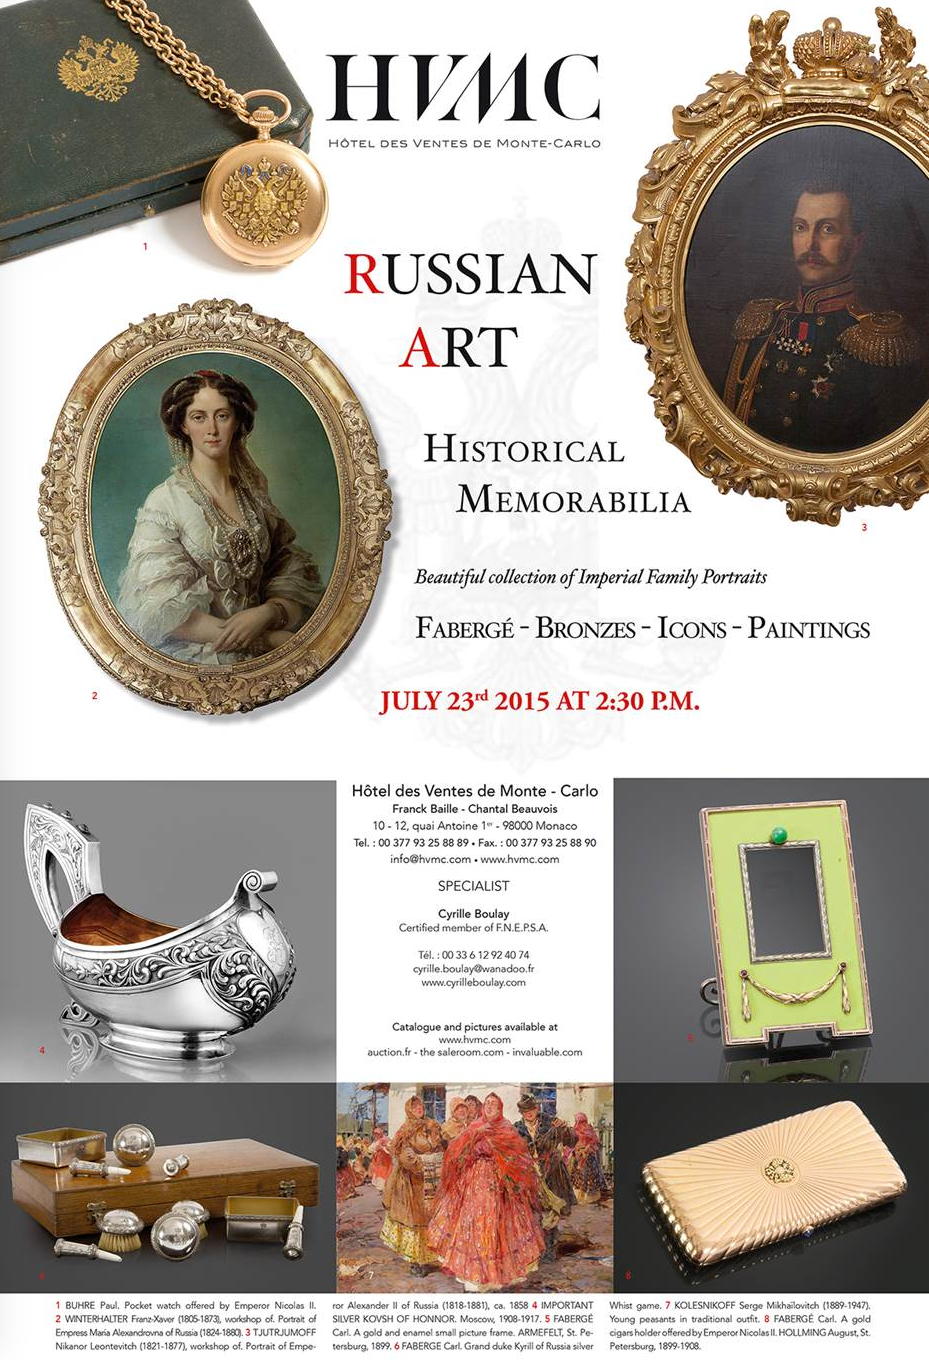 Russian Art. Historical memoriabilia.